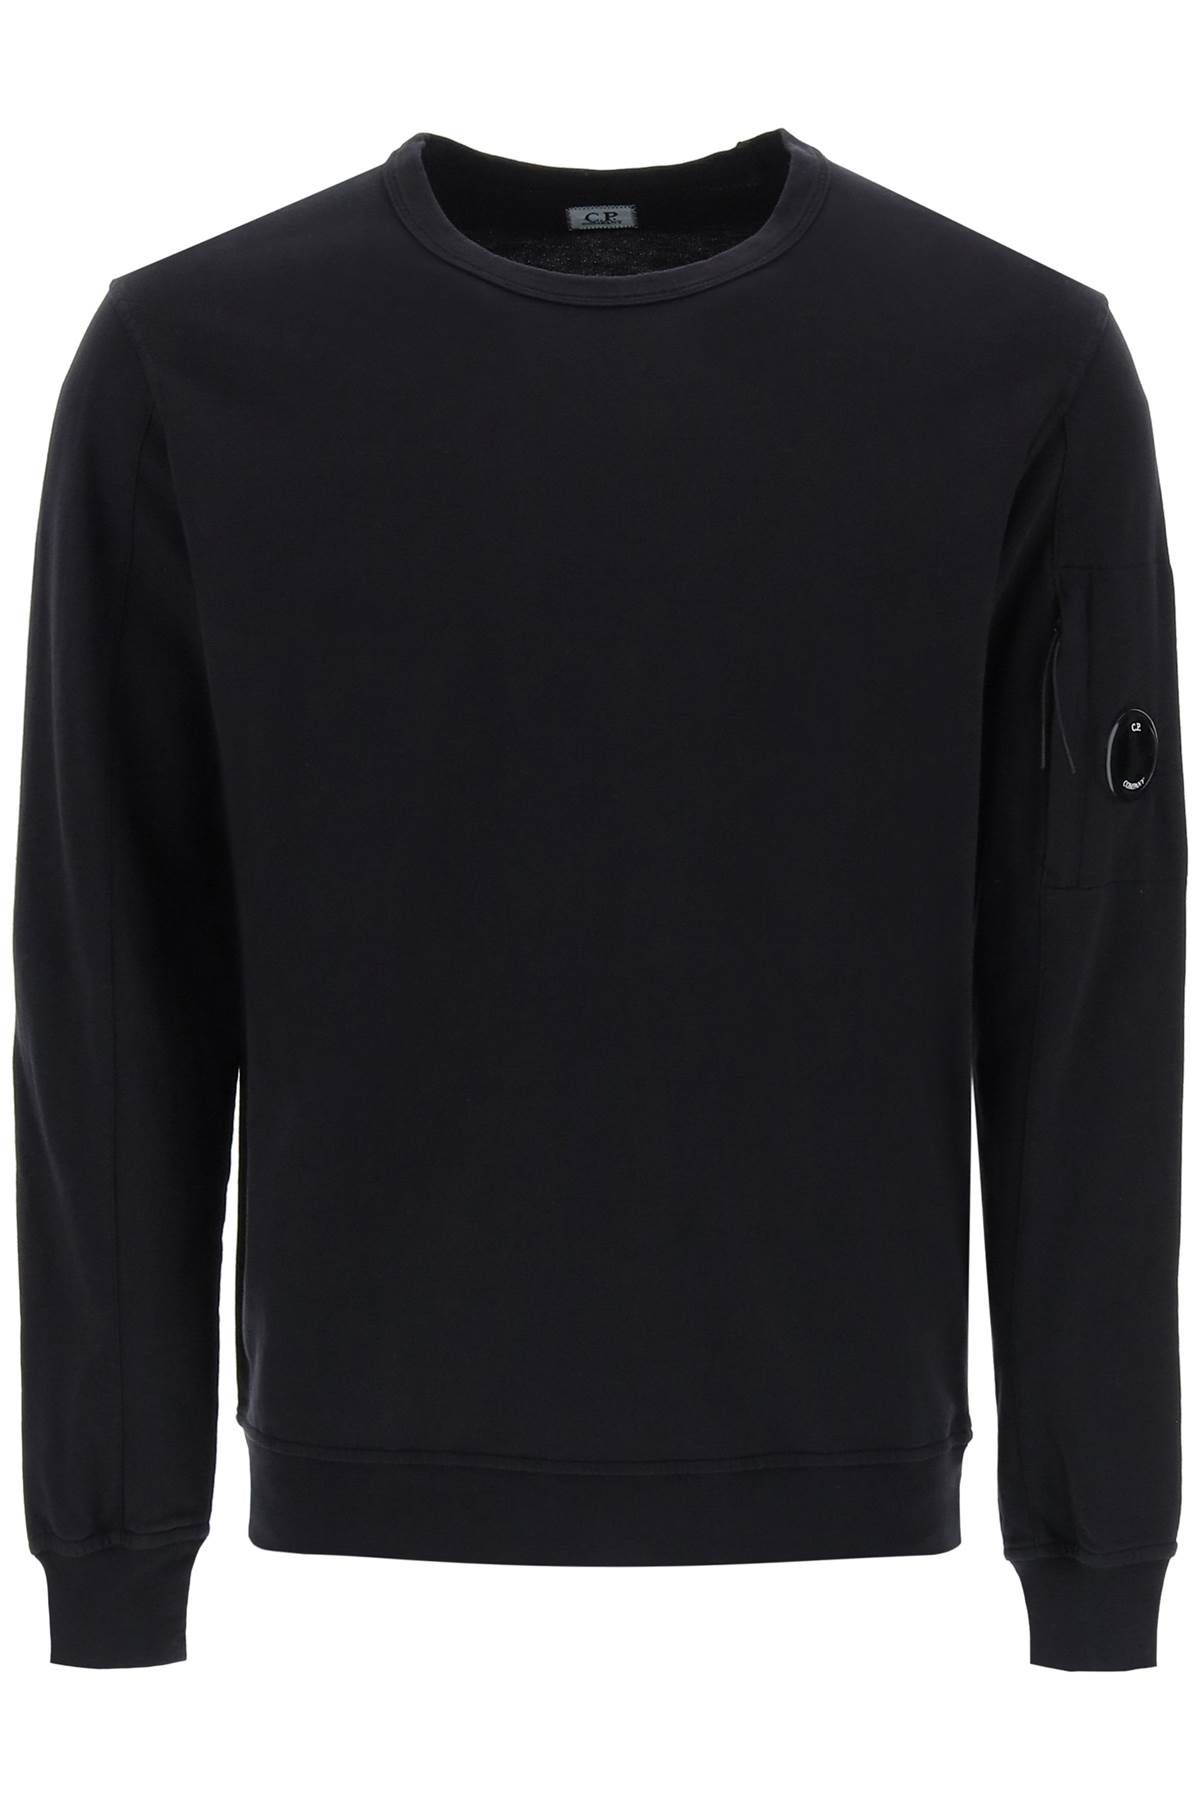 C.p. Company Light Pocket Sweatshirt In Black